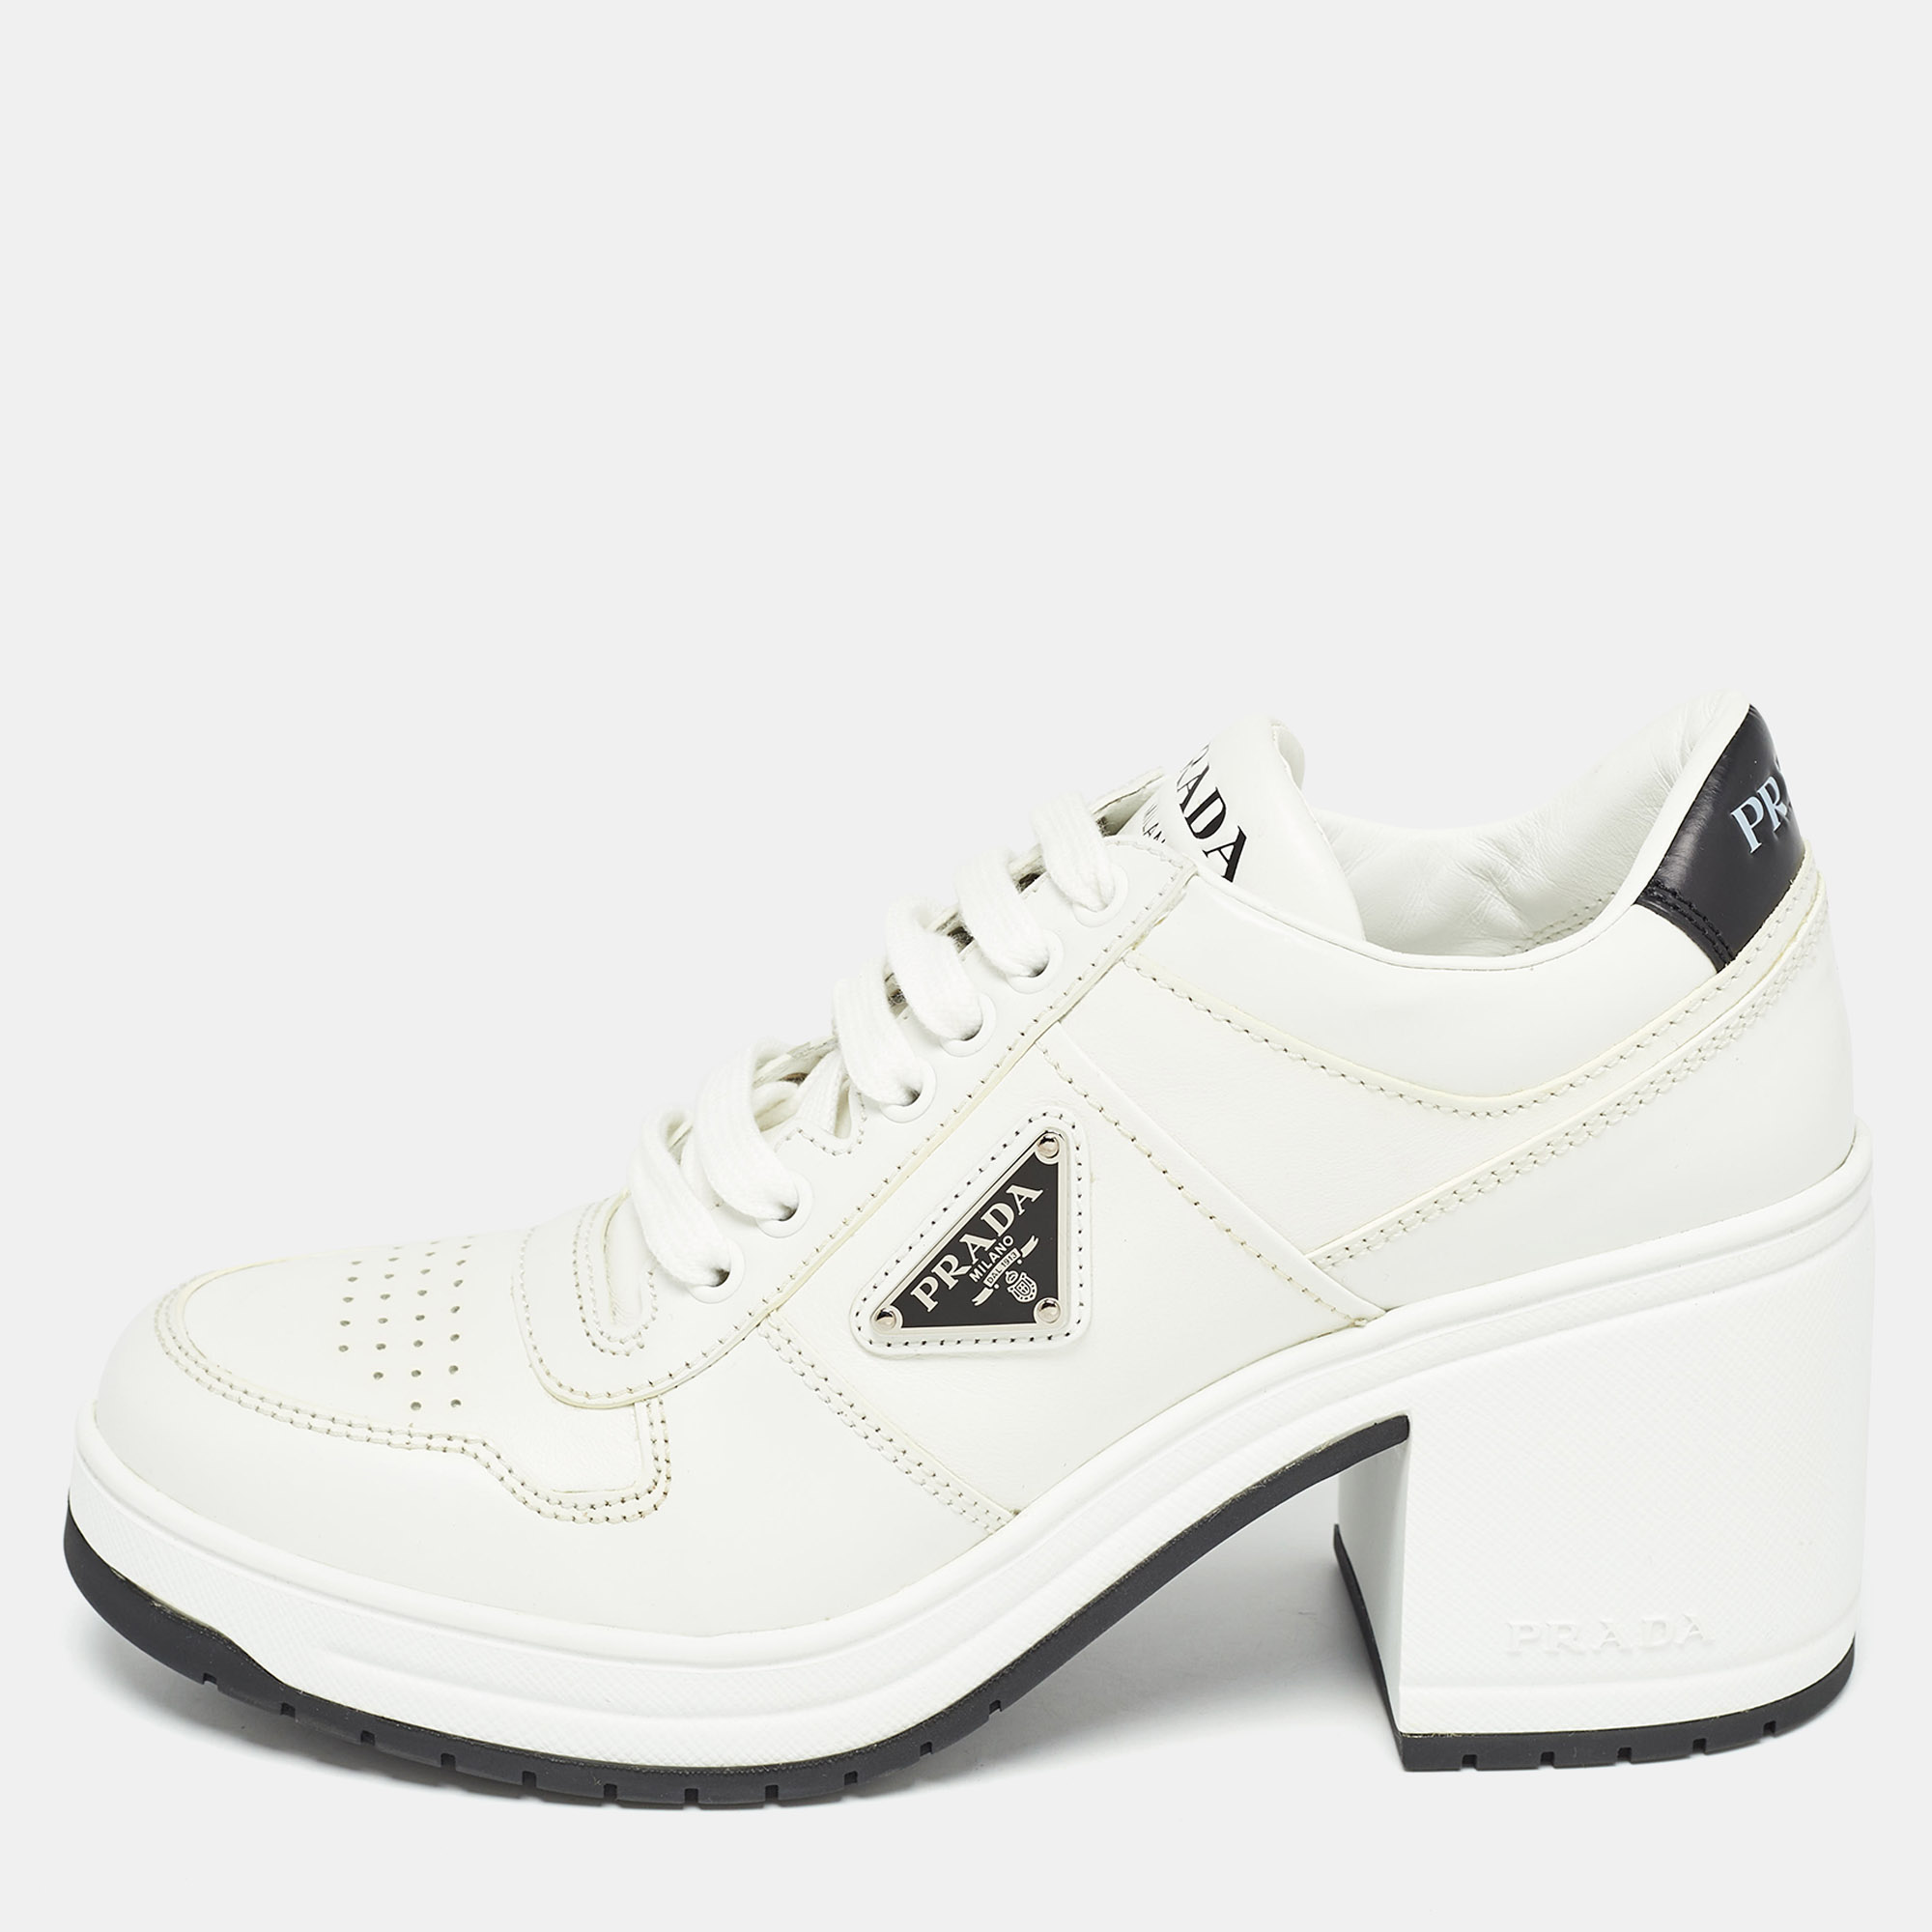 Pre-owned Prada White/black Leather Block Heel Sneaker Pumps Size 40